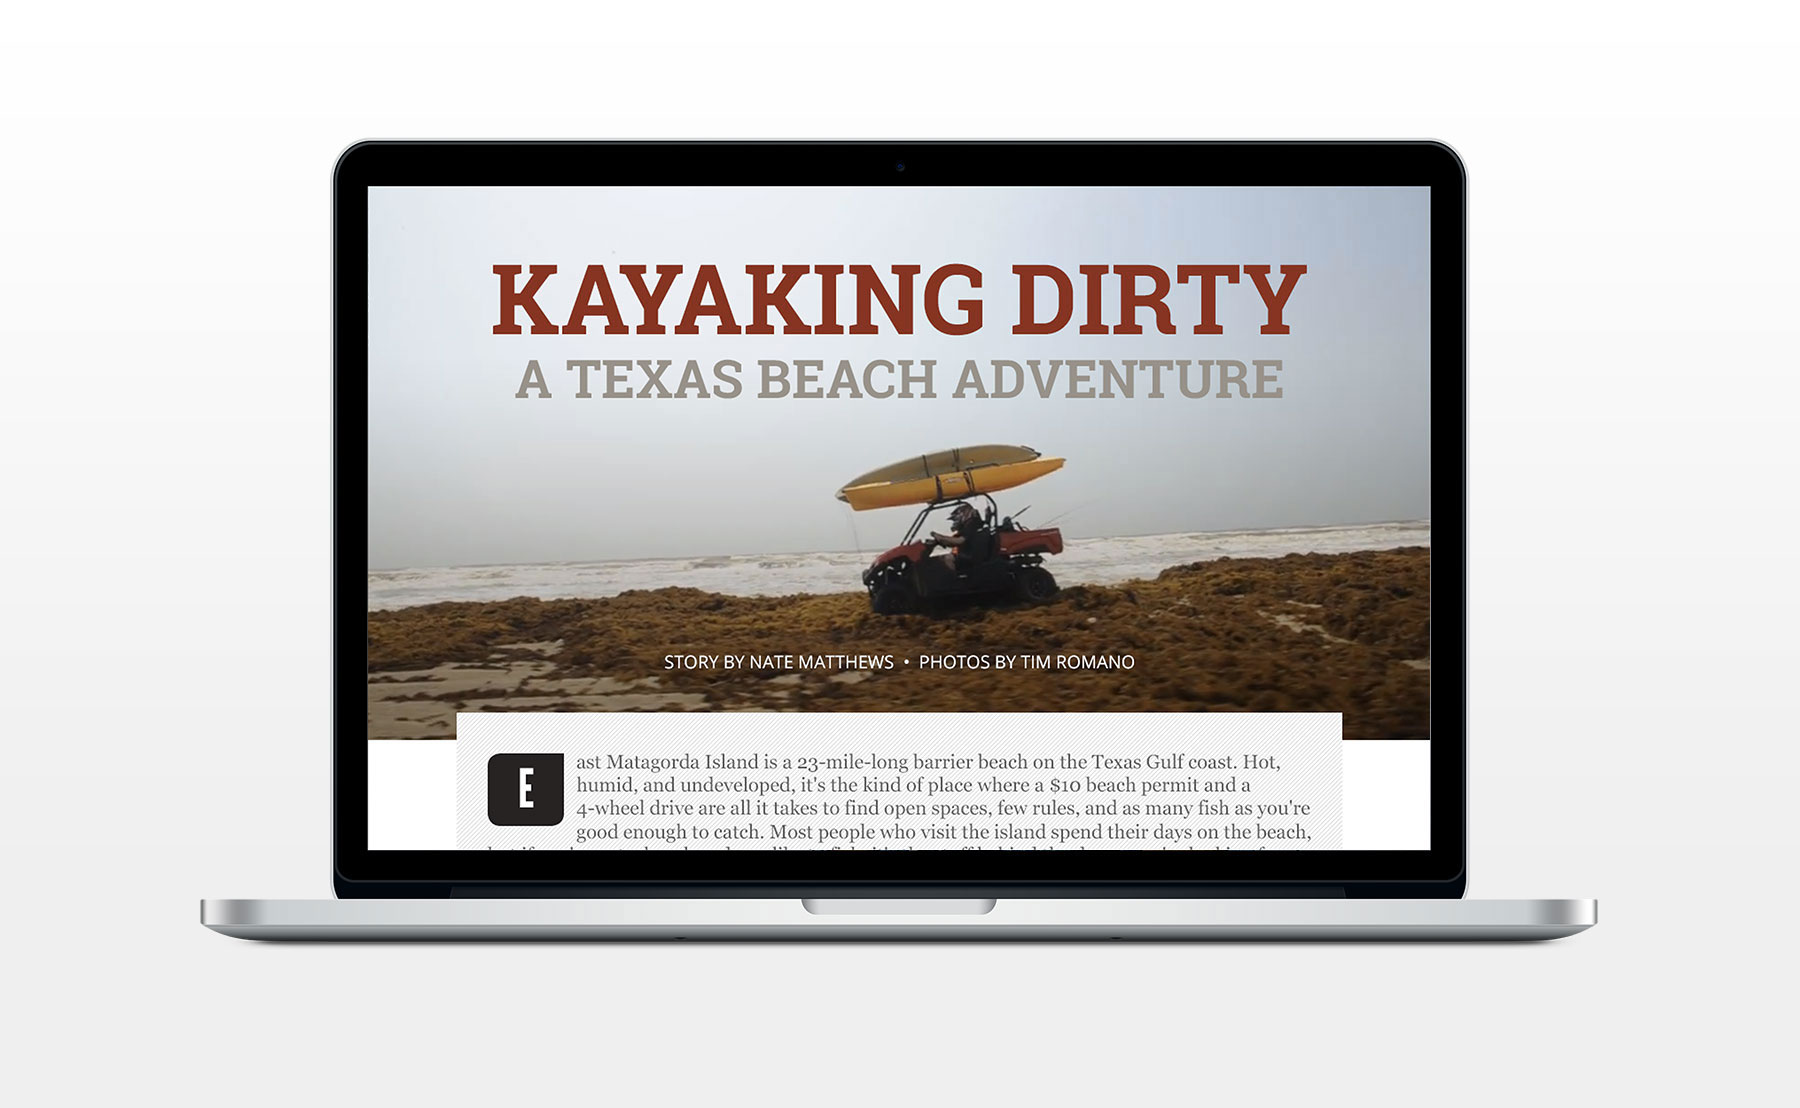 Field and Stream - Kayaking dirty a Texas beach adventure